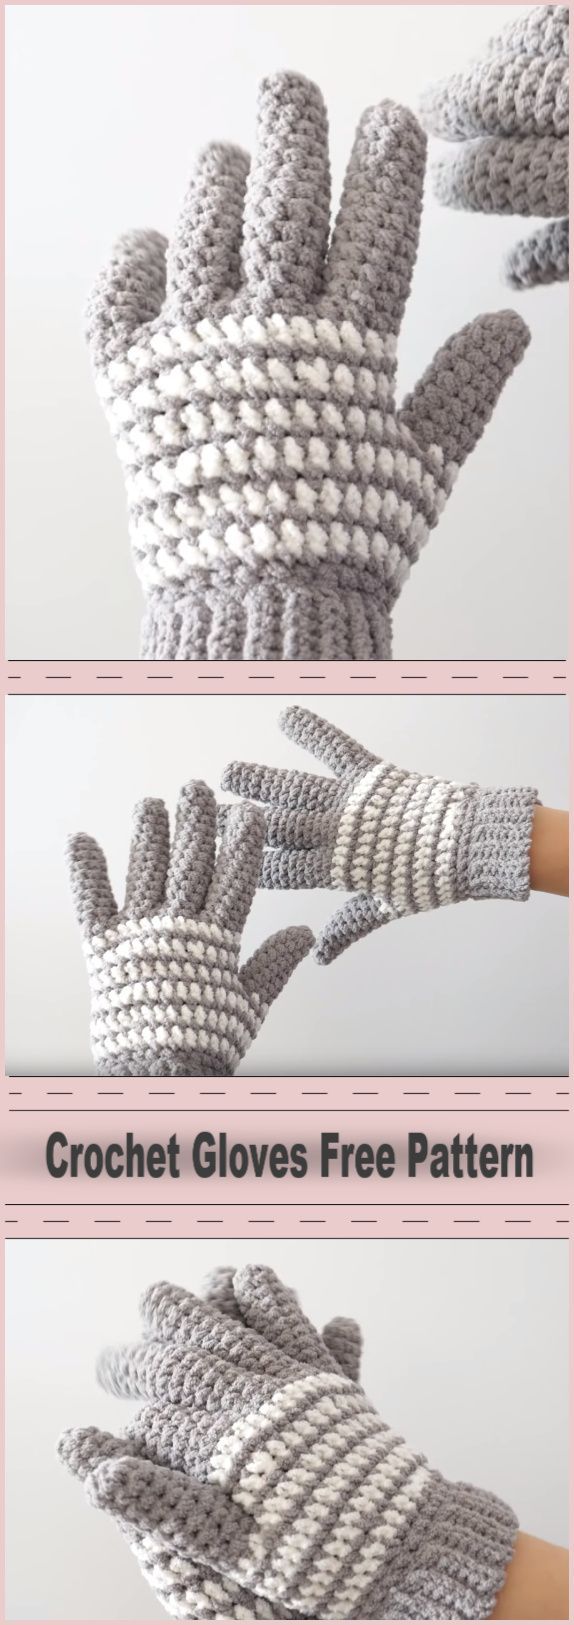 Crochet Gloves Free Pattern - Things To Crochet